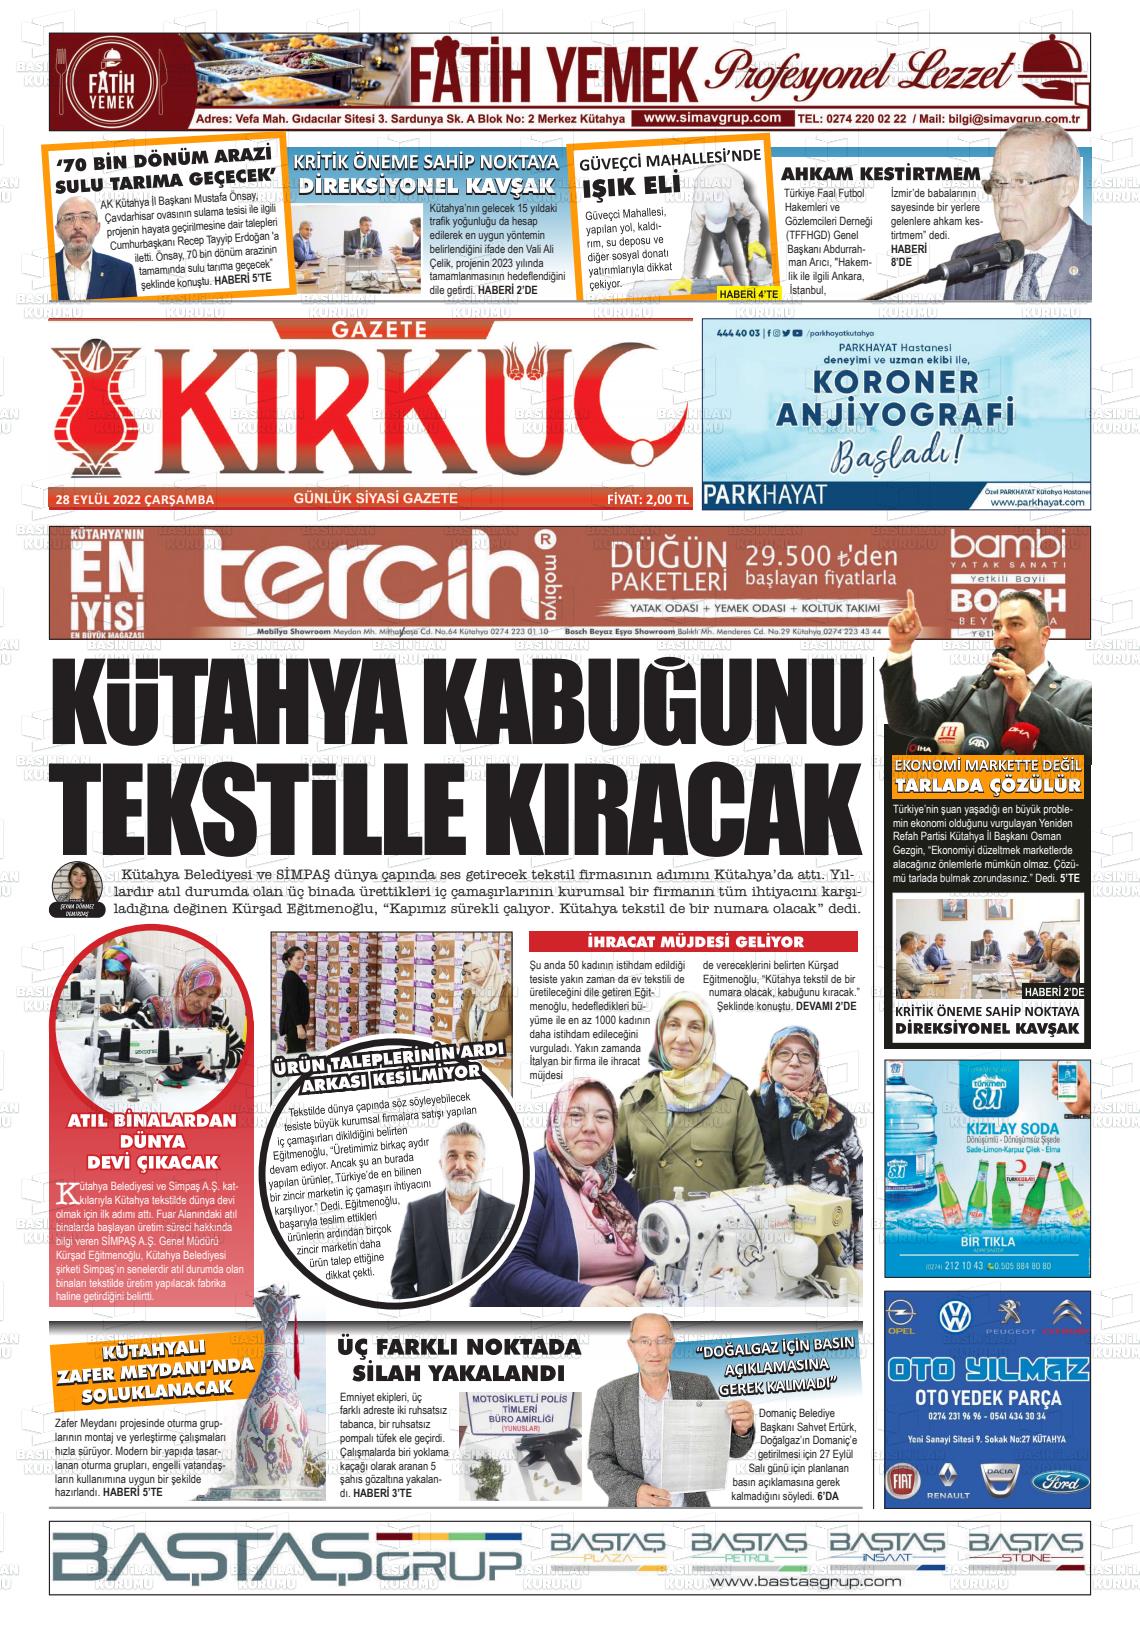 28 Eylül 2022 Gazete Kırküç Gazete Manşeti